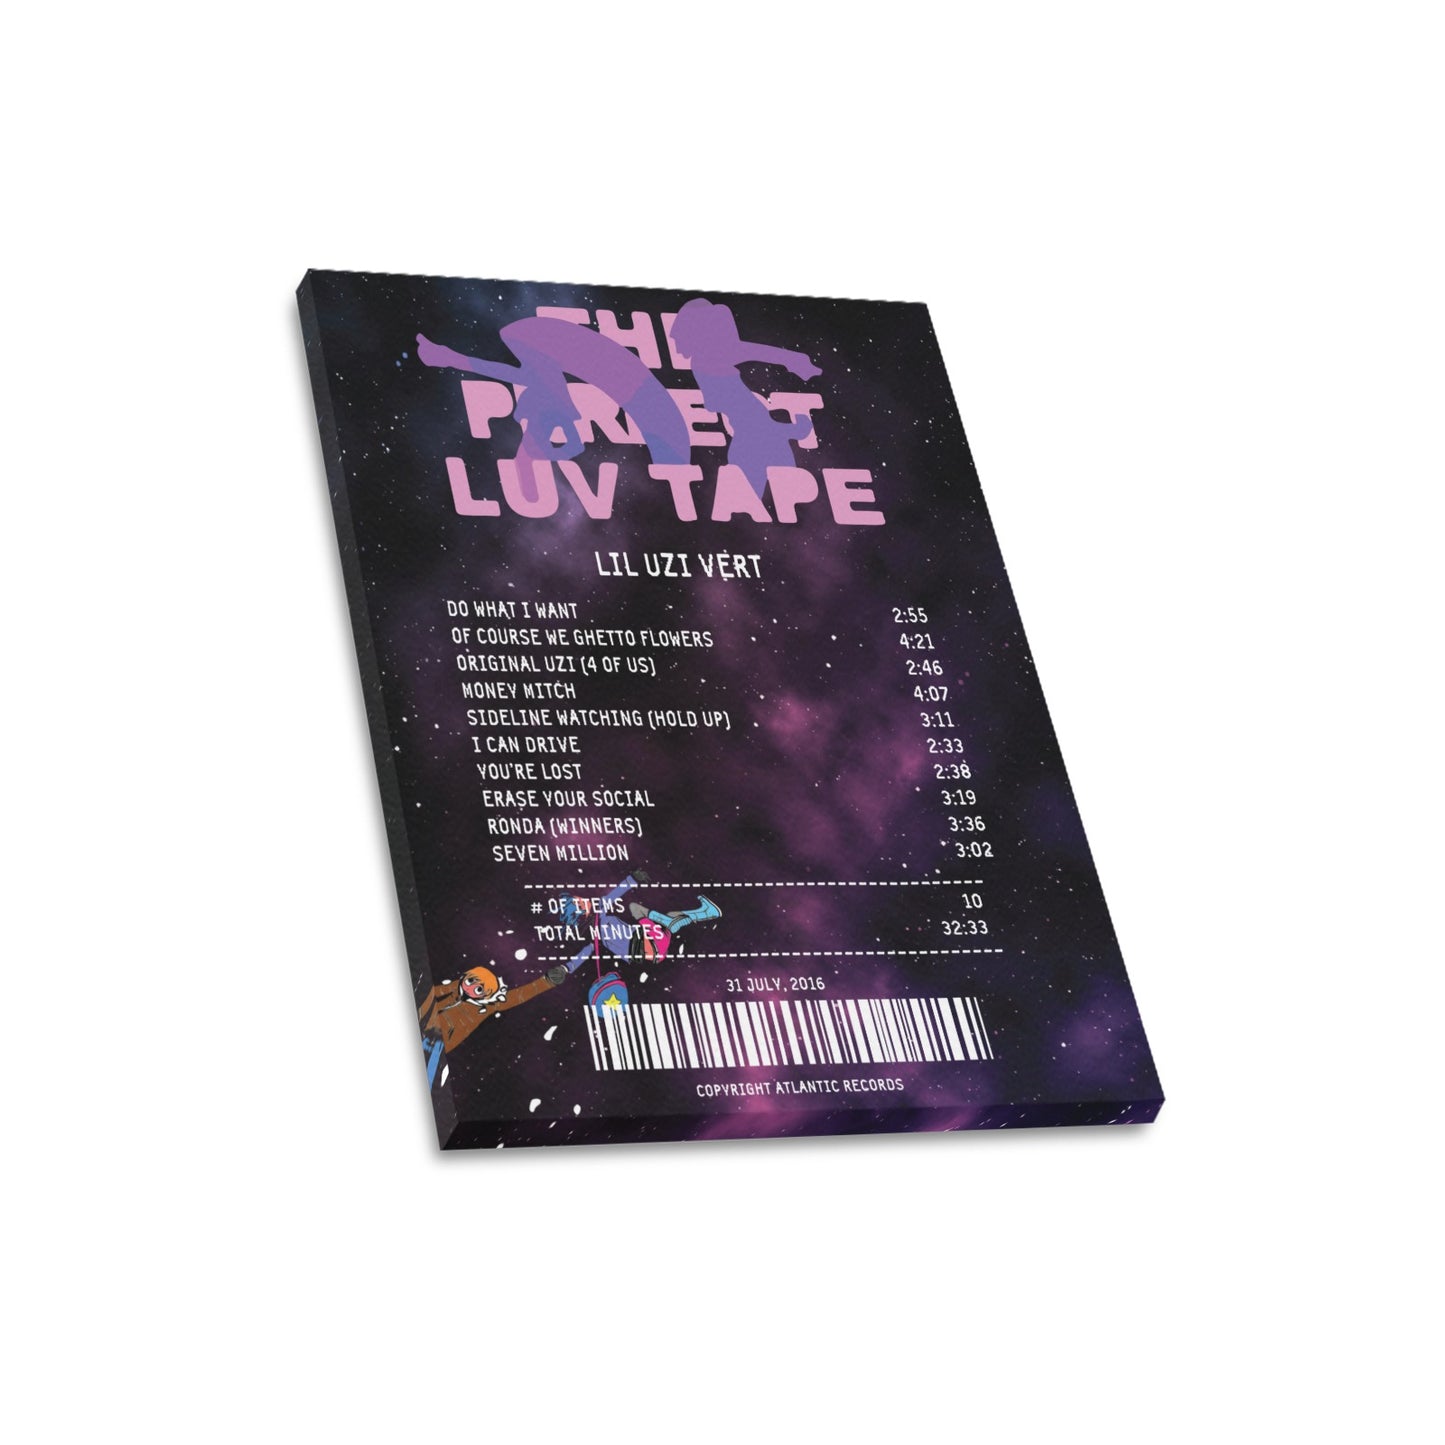 The Perfect Luv Tape - Lil Uzi Vert [Canvas]